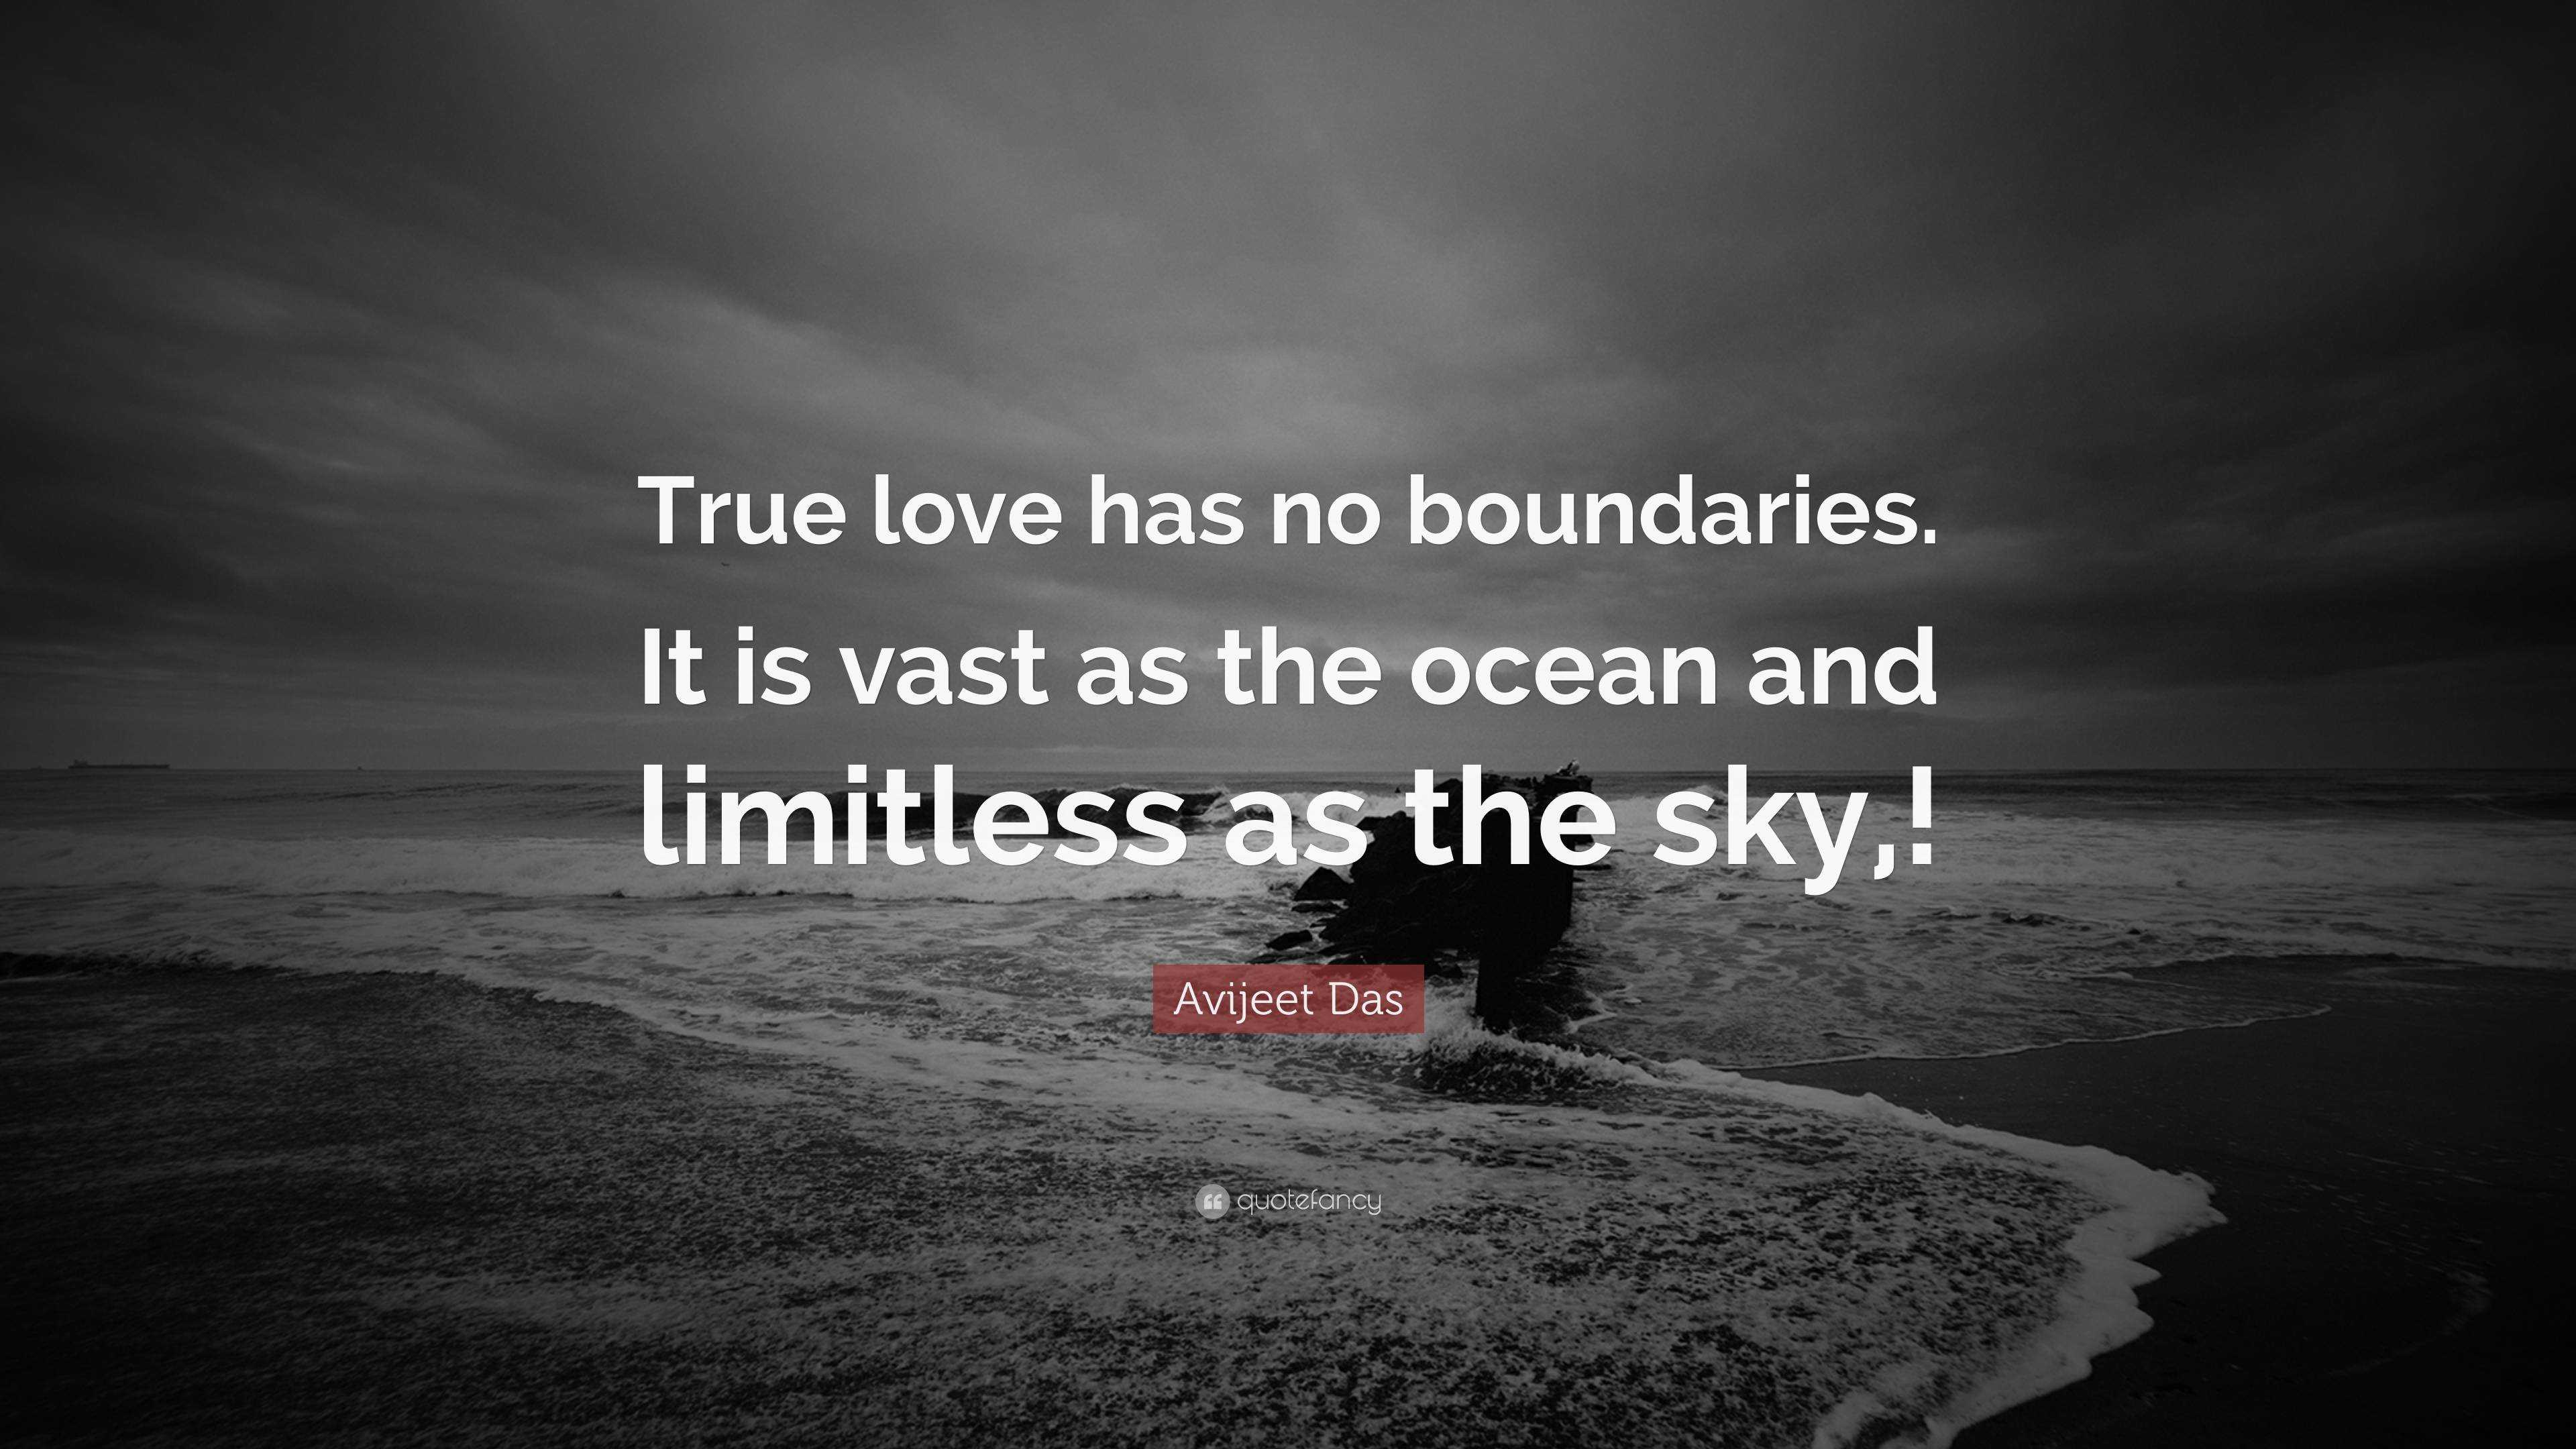 Avijeet Das Quote: “True love has no boundaries. It is vast as the ocean  and limitless